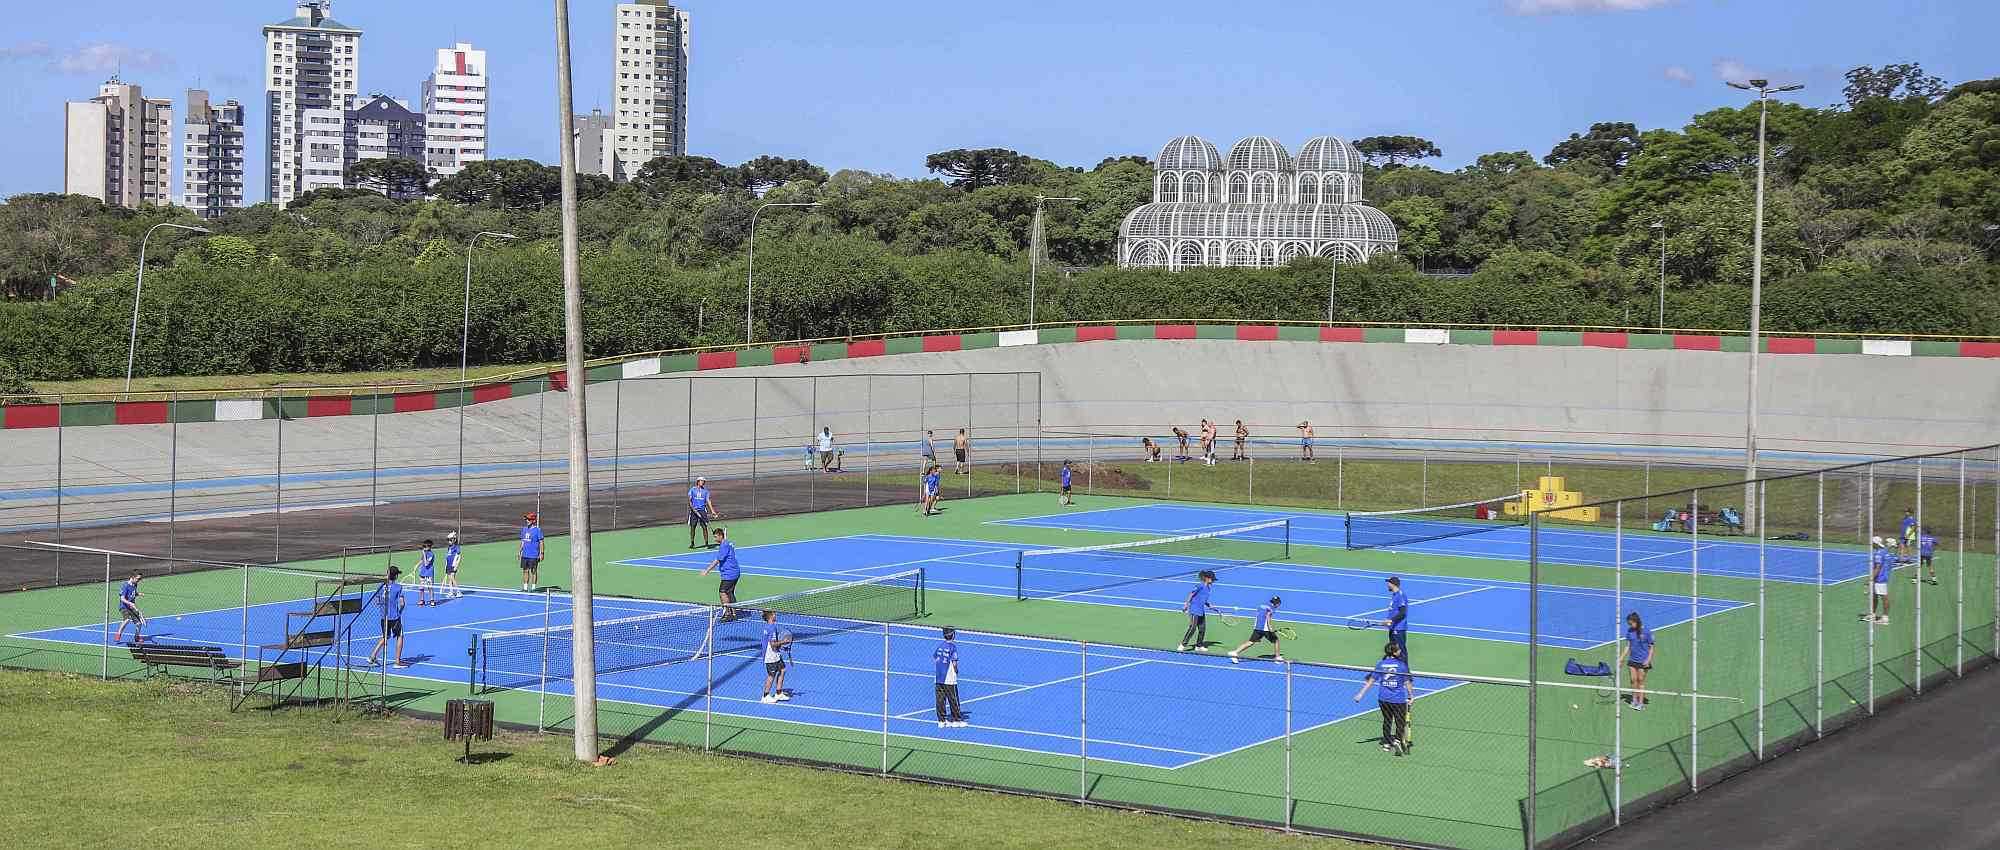 Treinamento Futebol Americano Feminino - Prefeitura de Curitiba